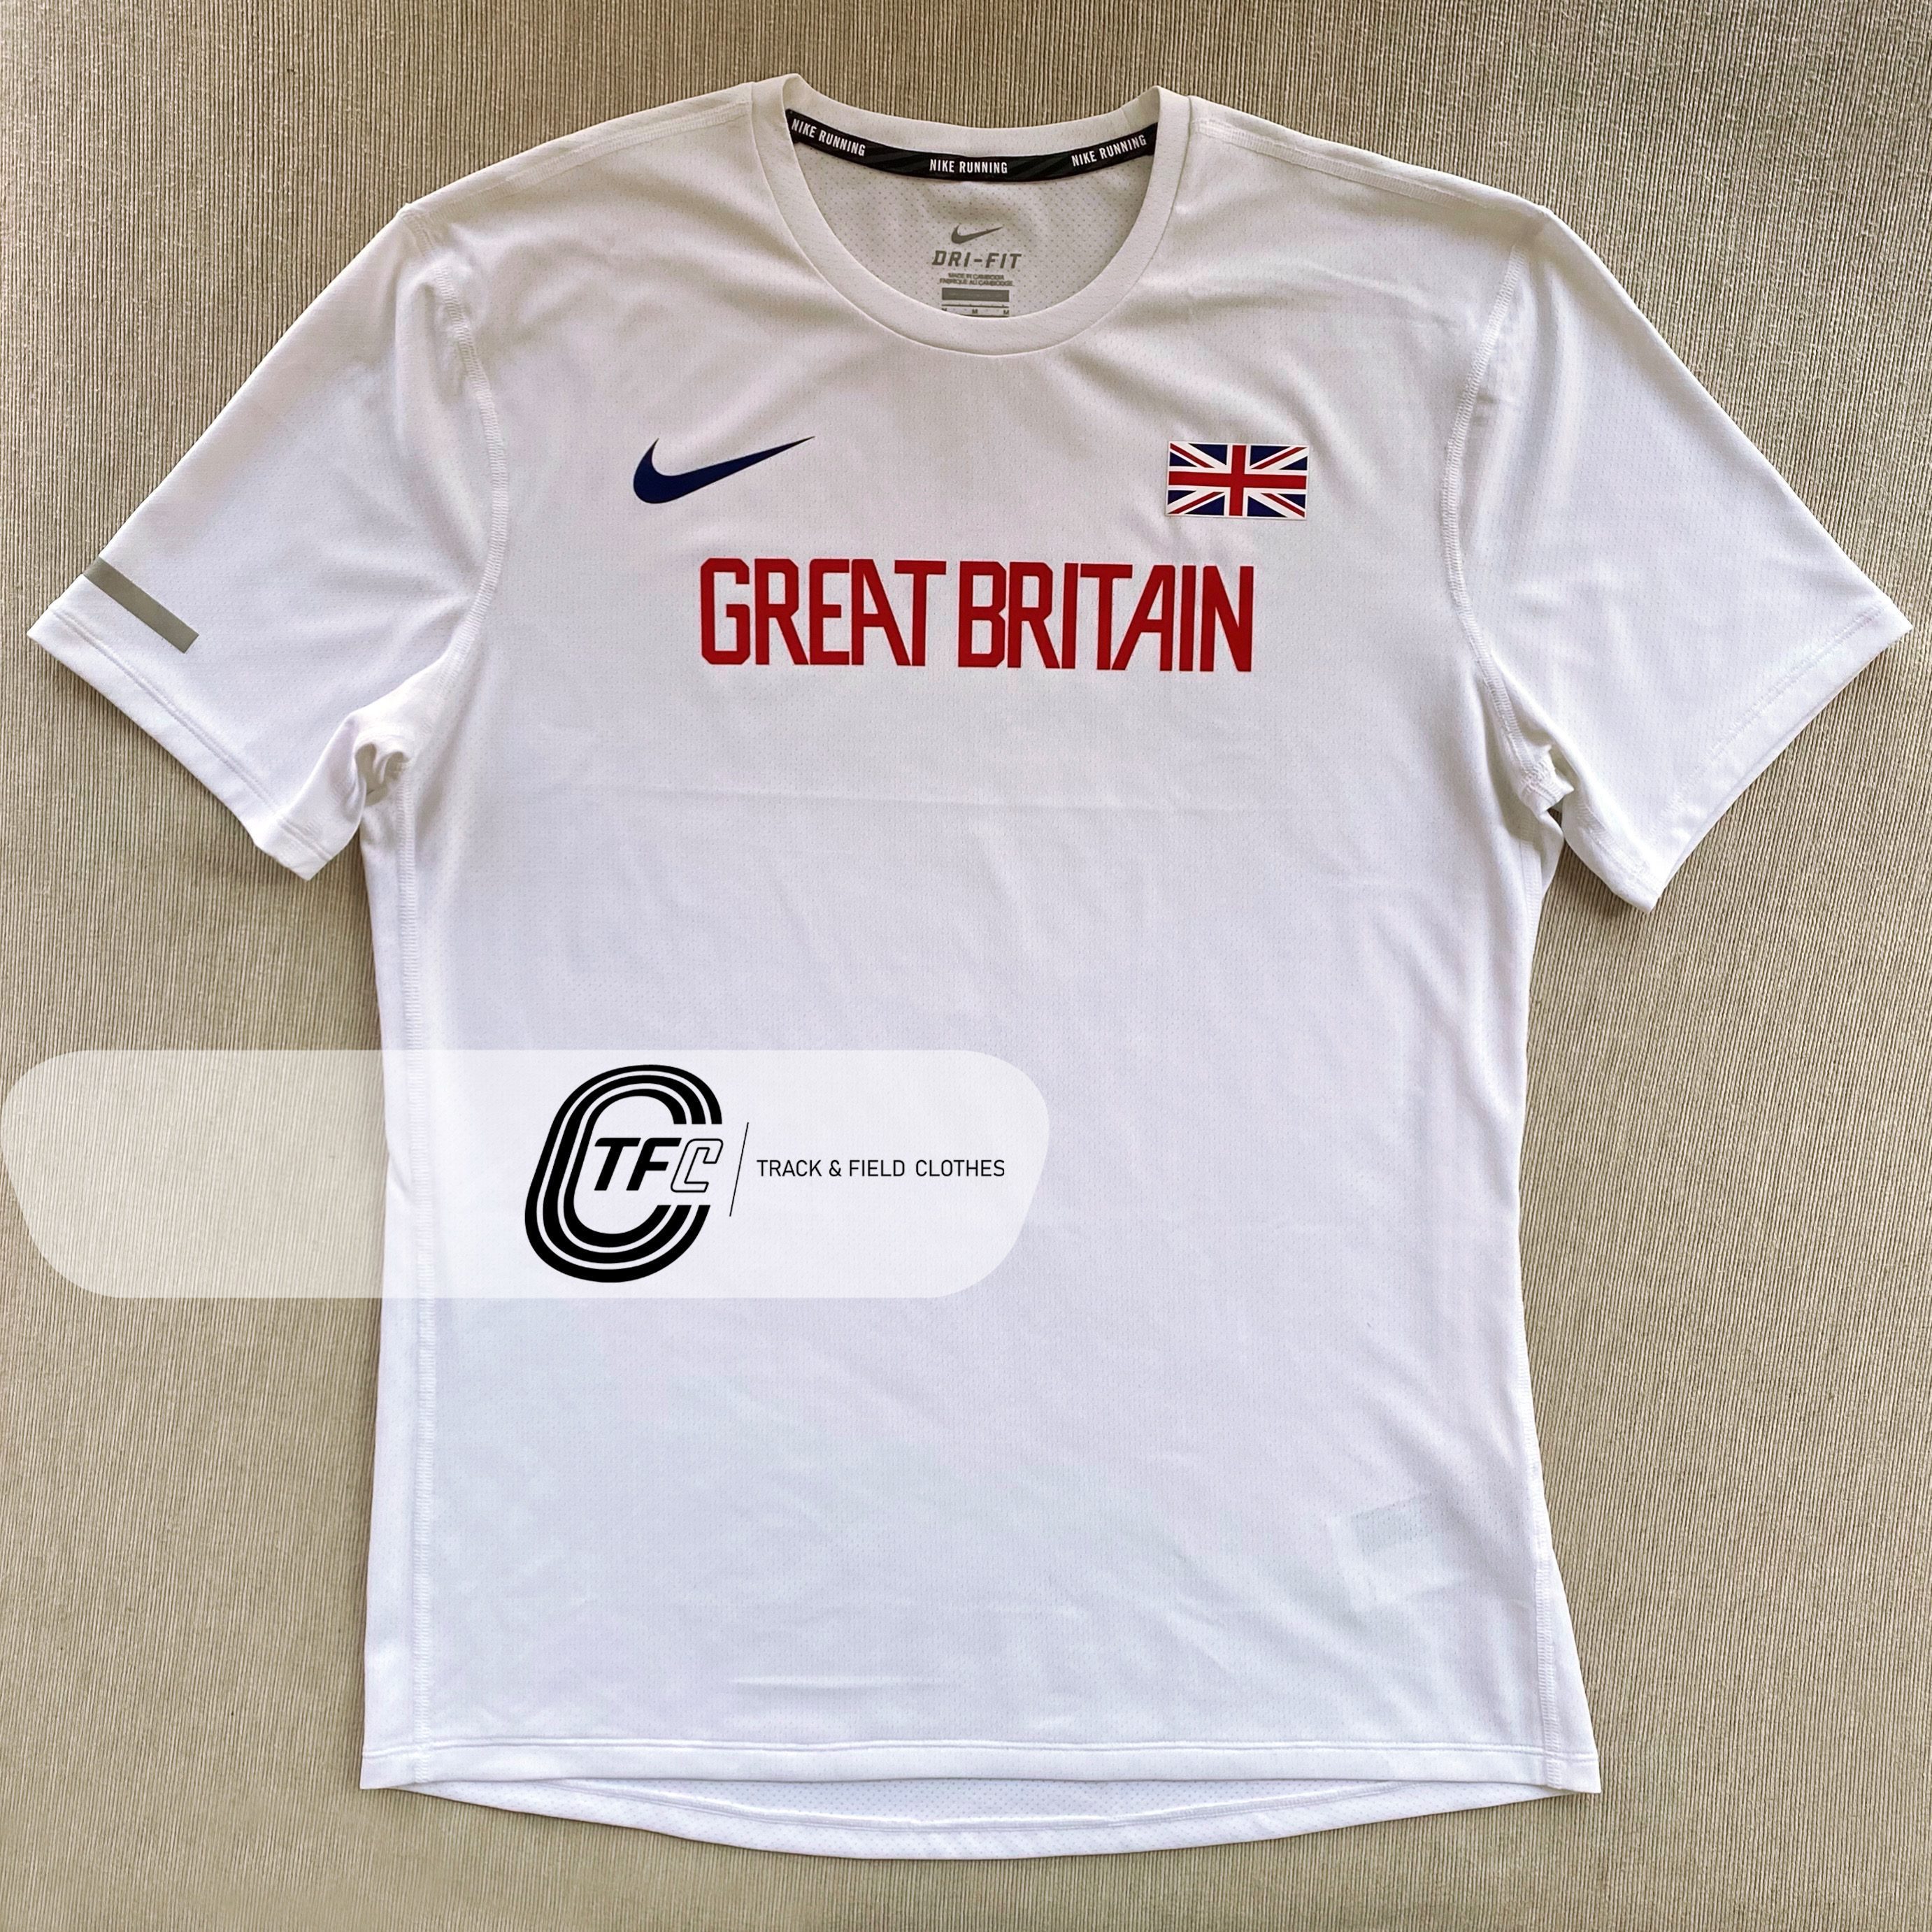 Perforering TVstation voldgrav Nike 2019 Great Britain International Team Pro Elite T-Shirt |  Trackandfieldclothes